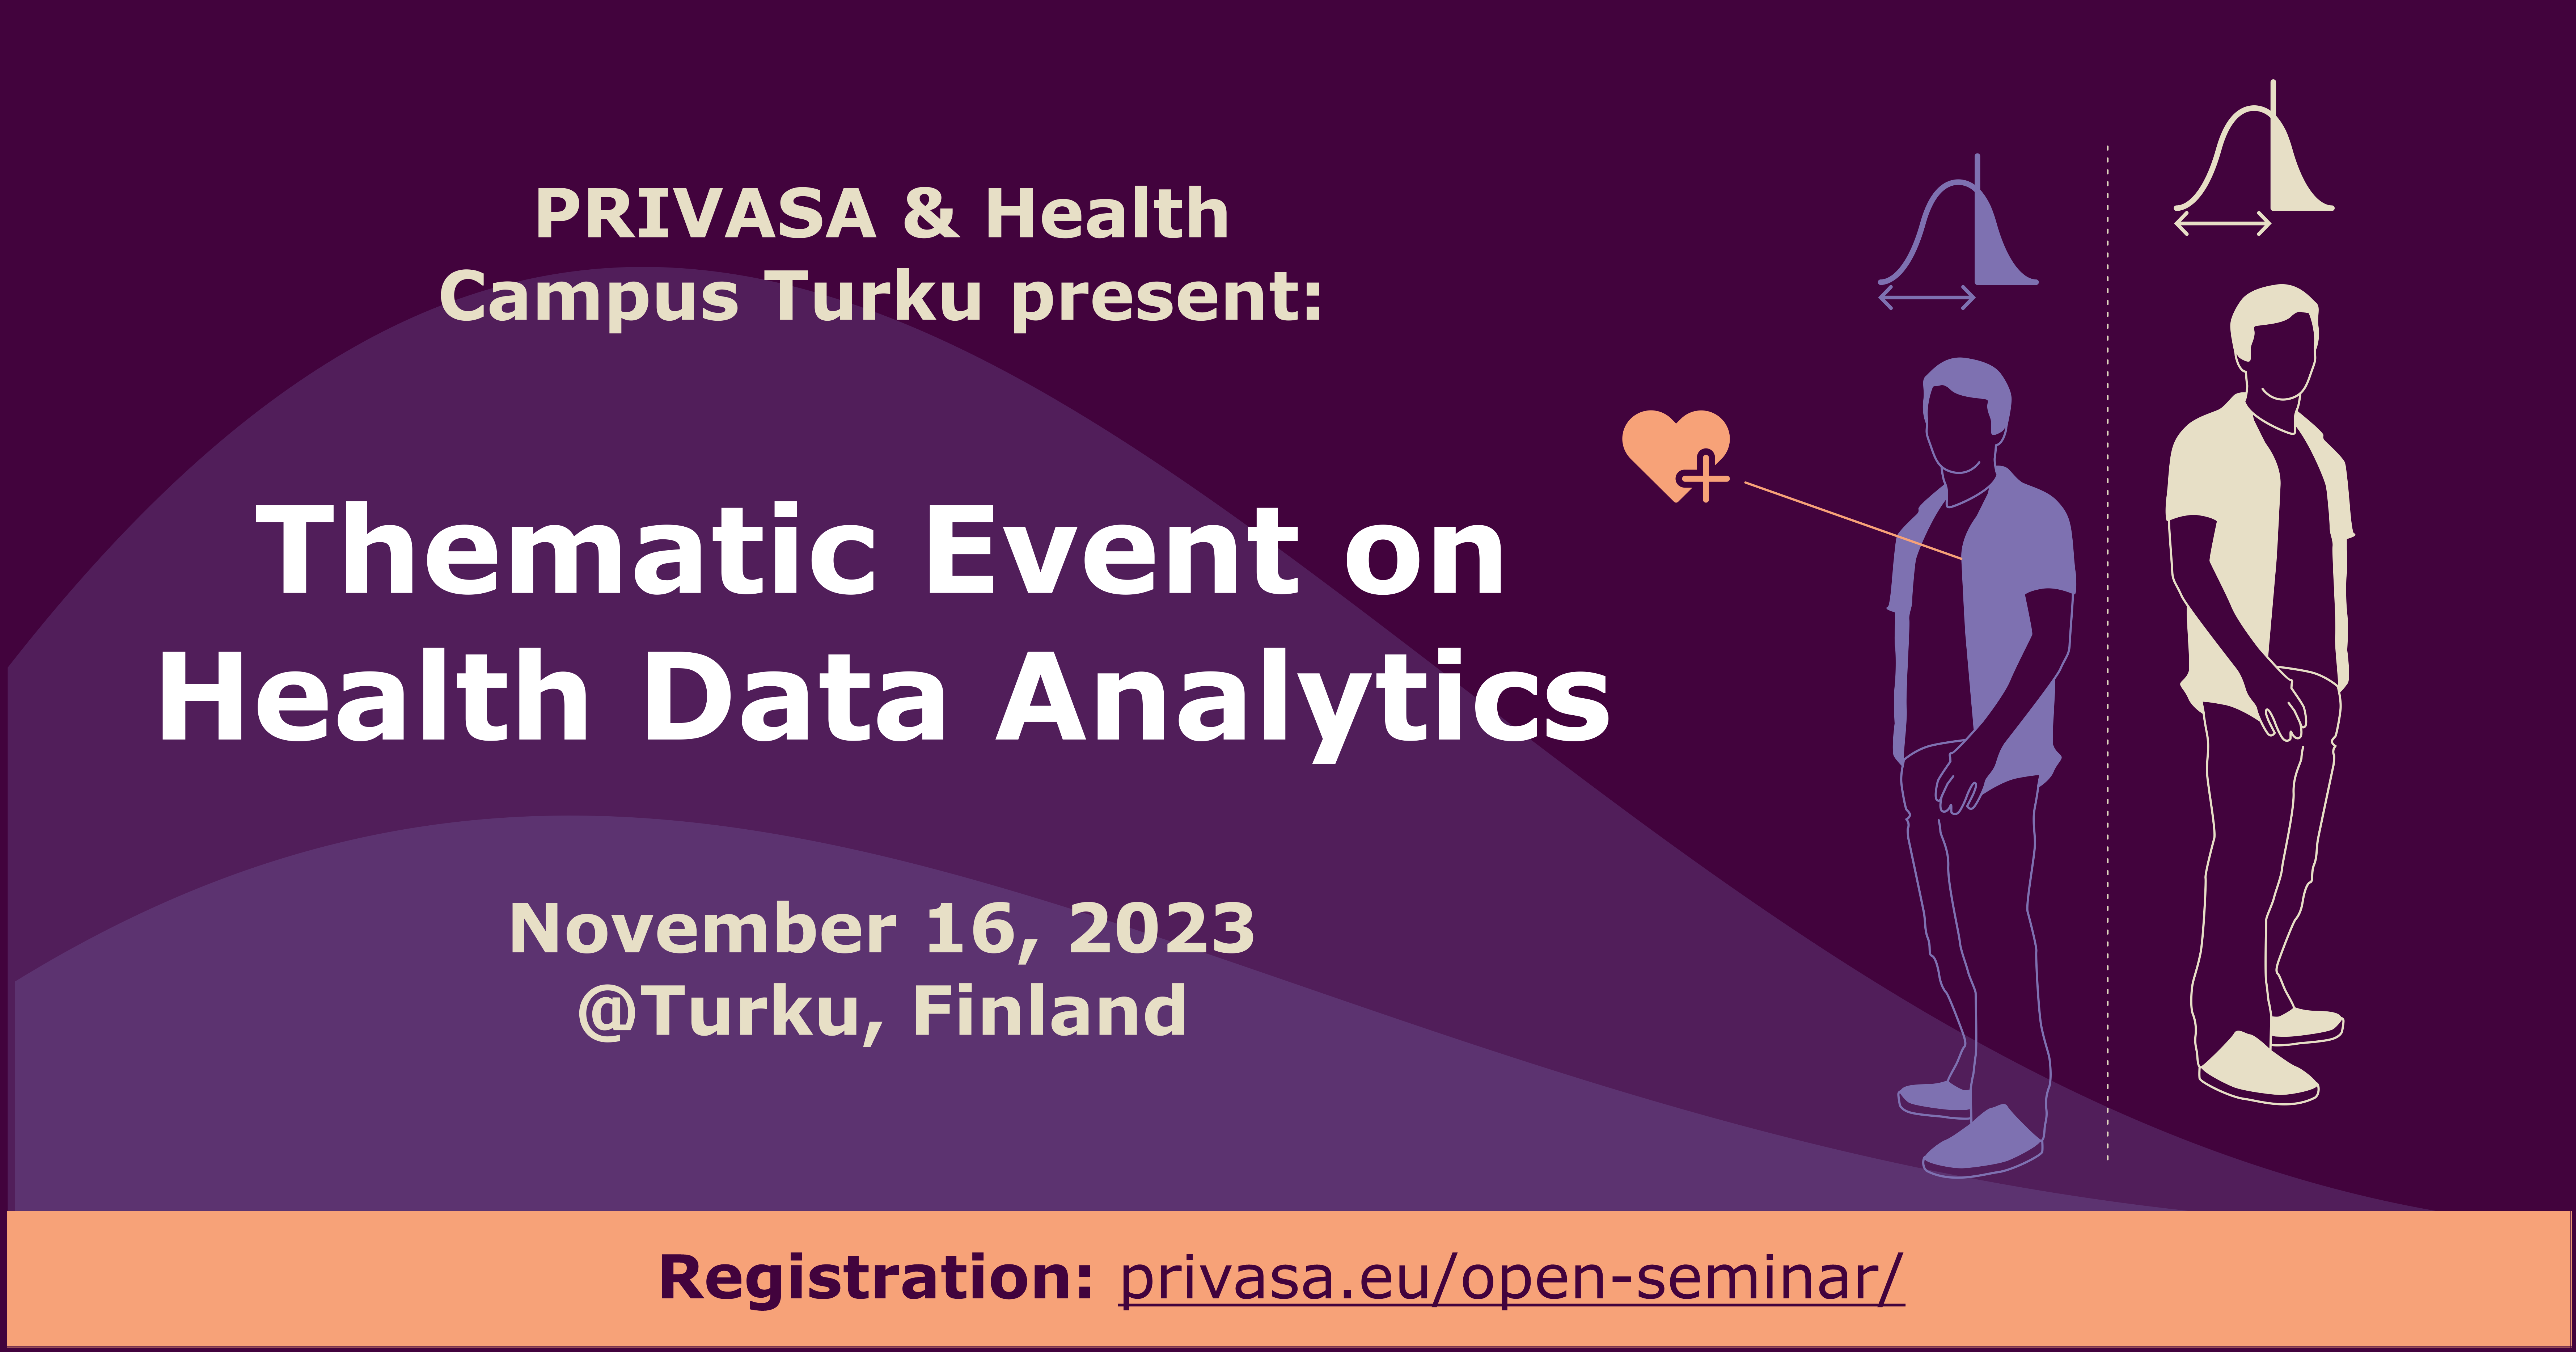 PRIVASA and Health Campus Turku present: Thematic event on health data analytics, November 16, Turku, Finland. Registration: privasa.eu/open-seminar